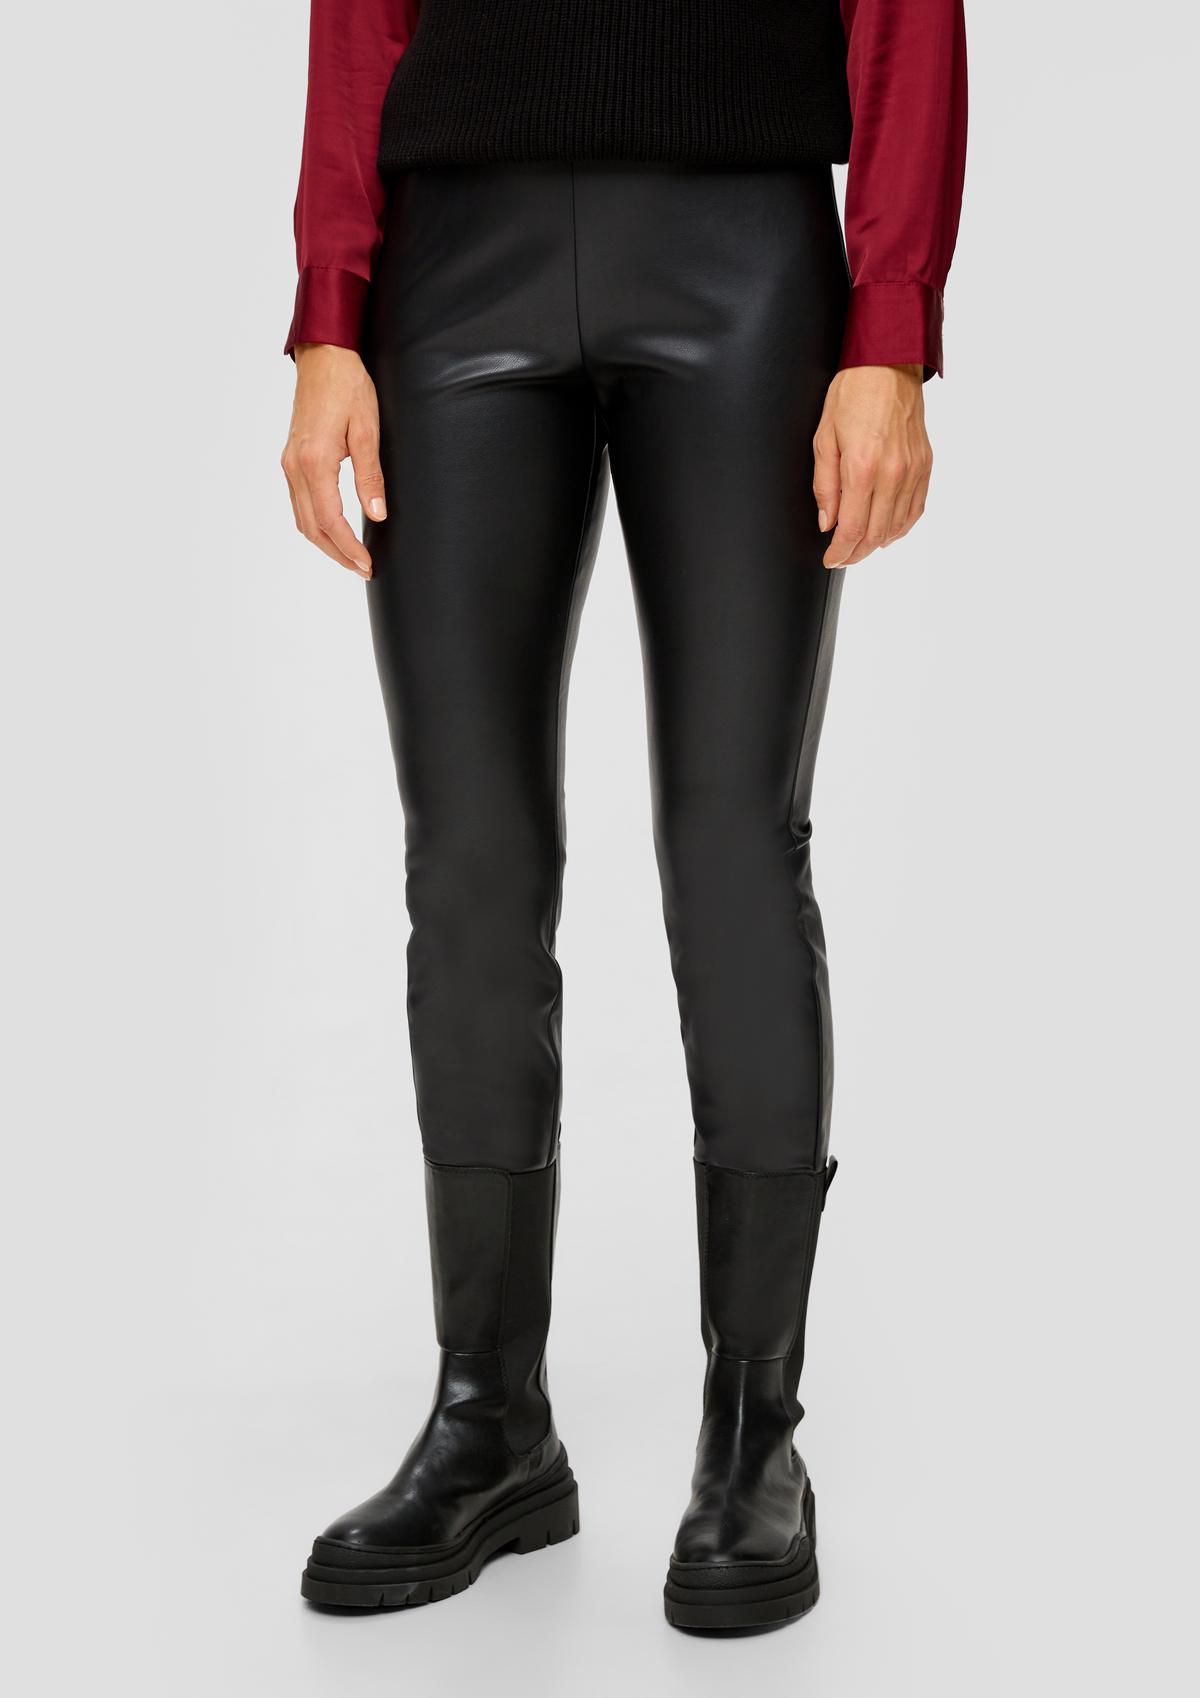 leggings leather black slim faux fit: - Extra